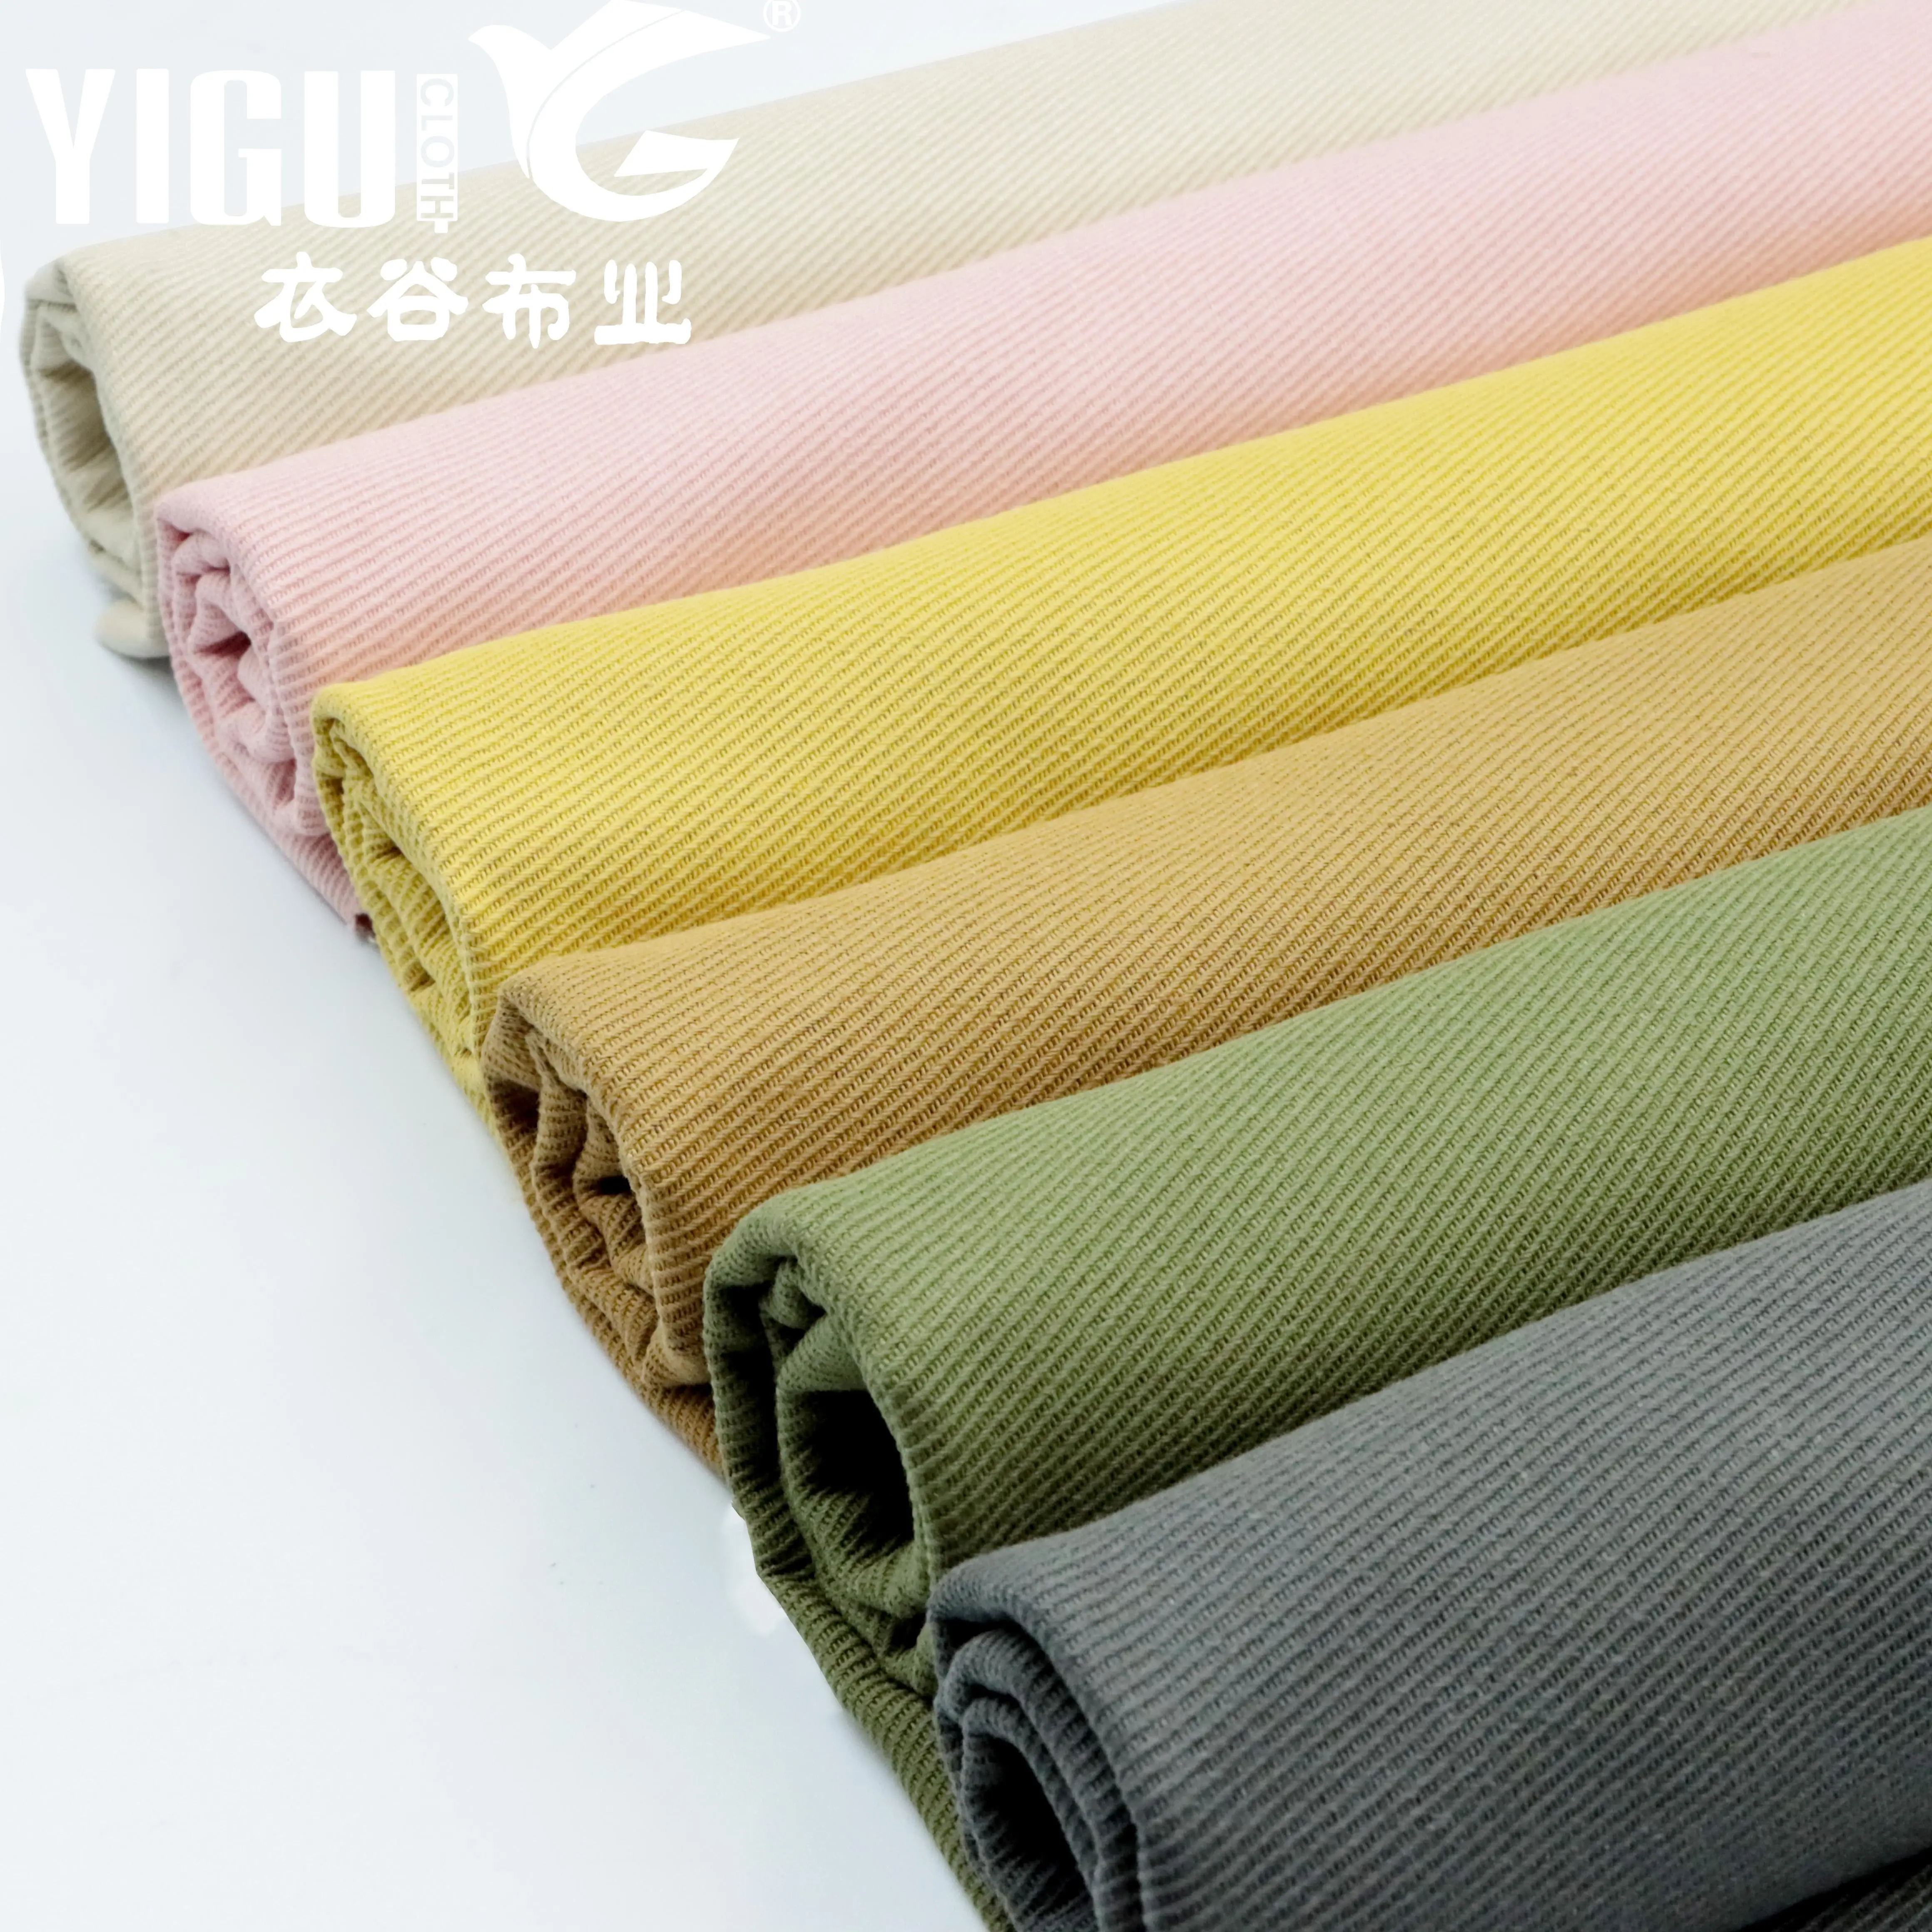 Pabrik Cina 100% katun amunisi kain gratis kualitas tinggi dan perasaan lembut kain katun cuci tidak akan memudar kain katun